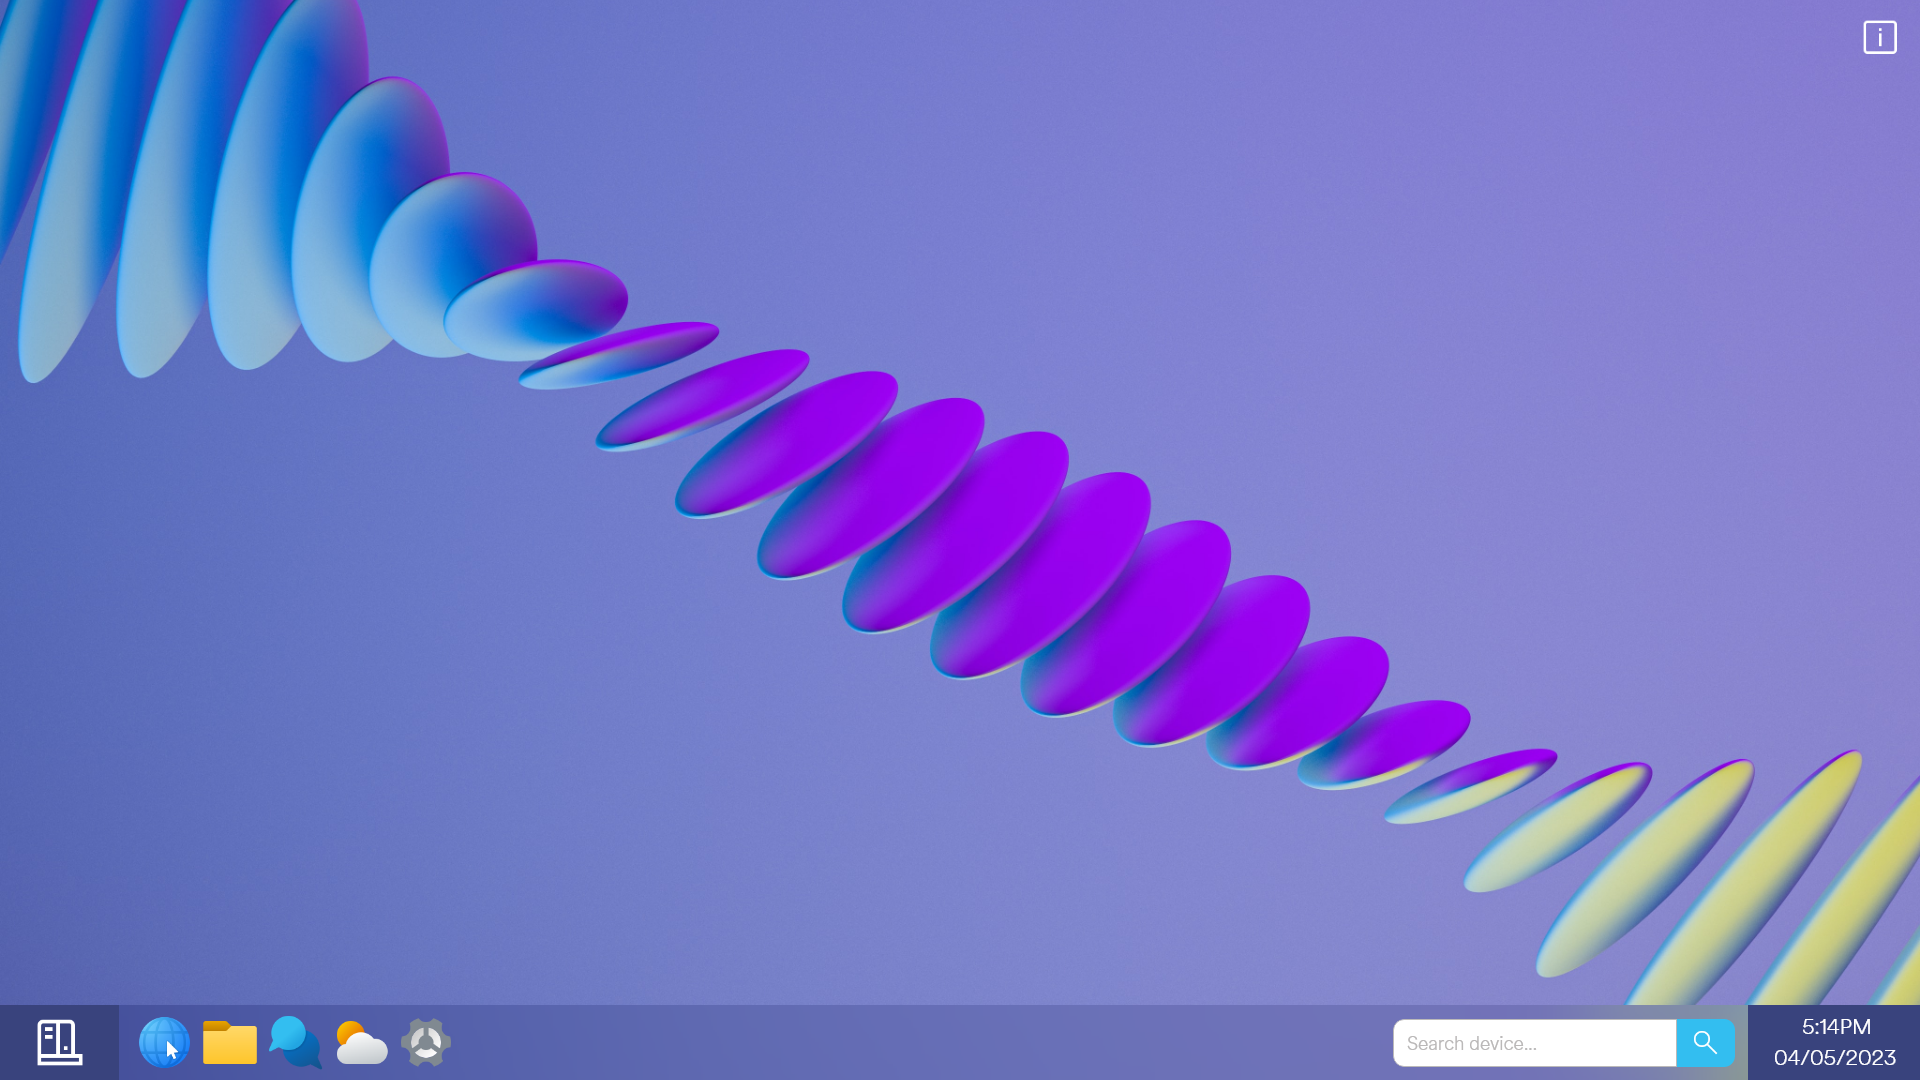 Wyco Netz OS 23 screenshot